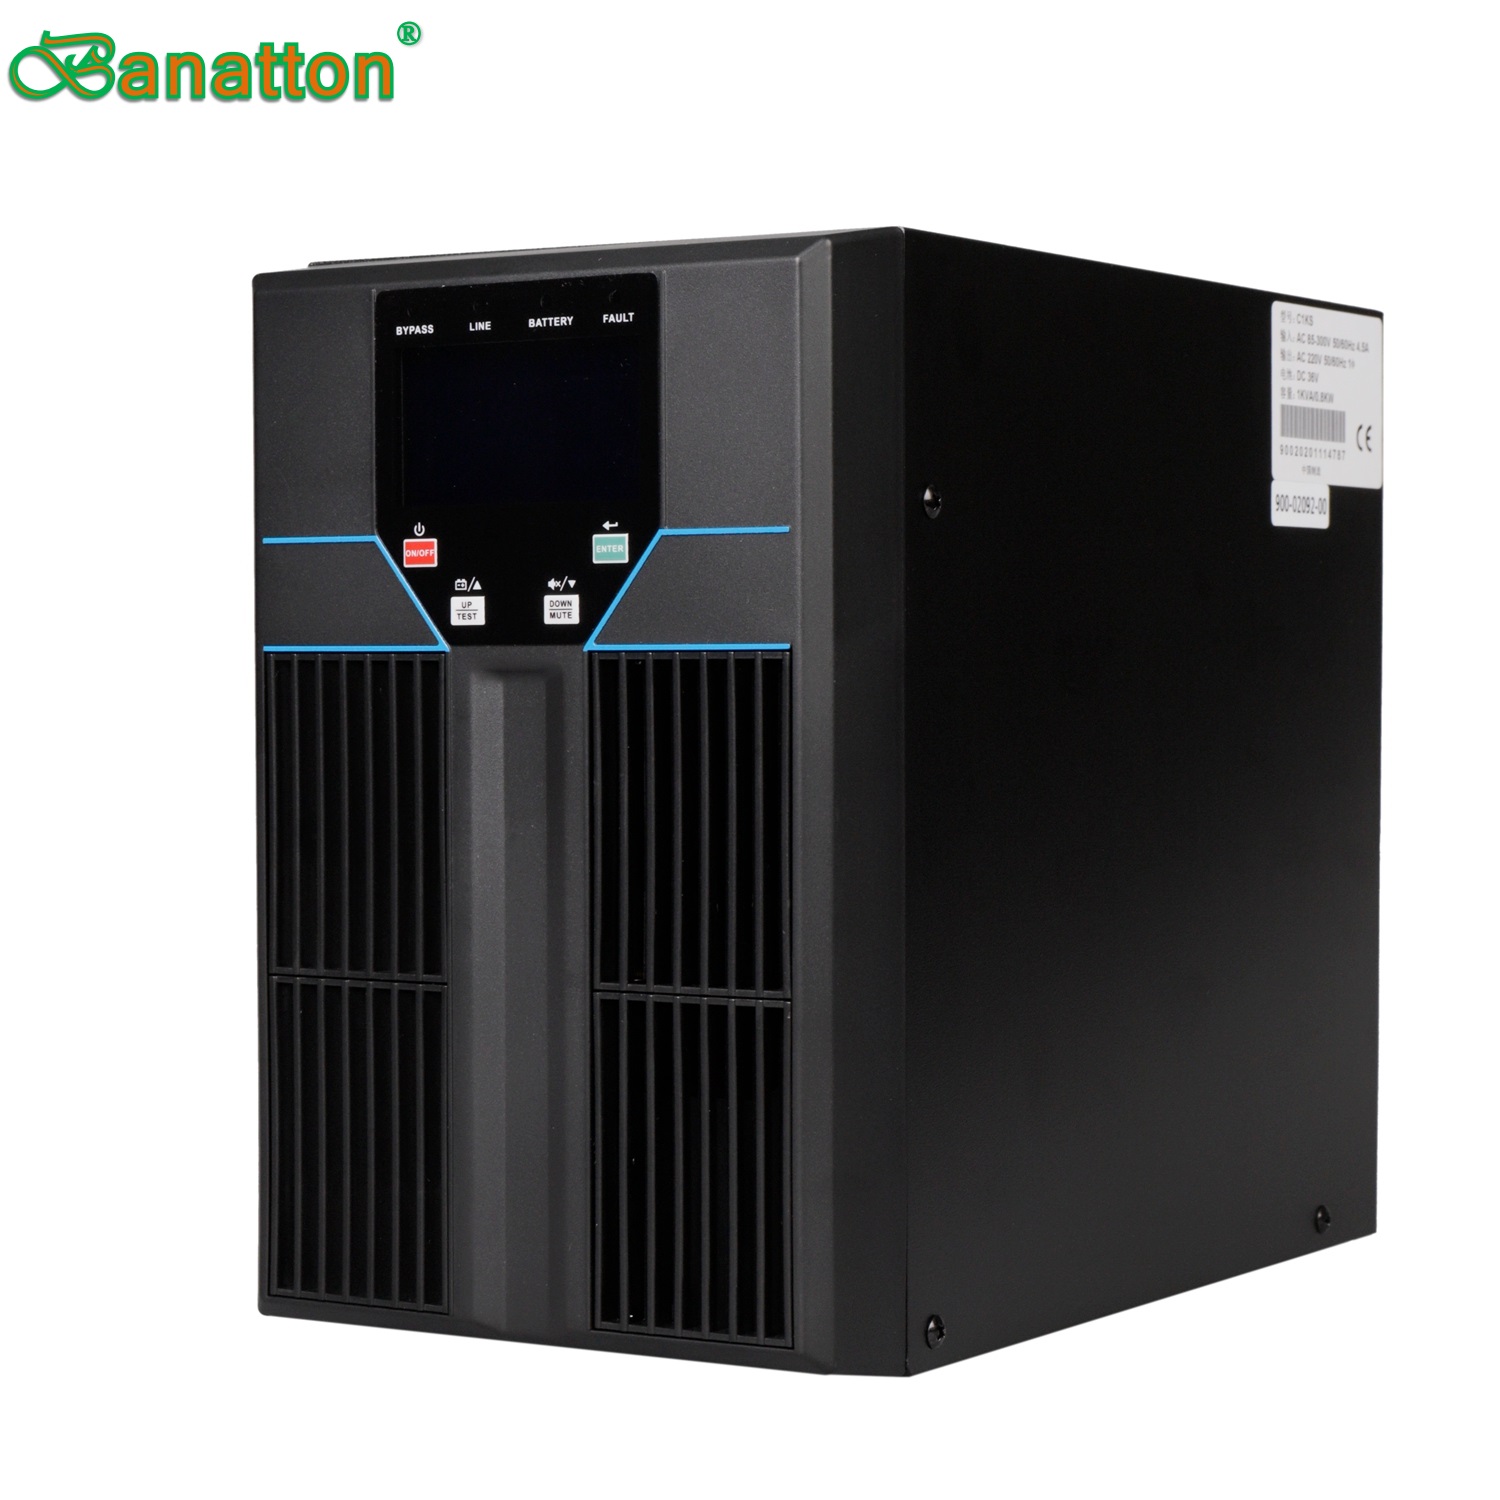 Banatton 1~3K-Li Online UPS Li-ion Battery 220V/230V/240V PF0.9 IEC62040 Uninterrupted Power Supply Featured Image